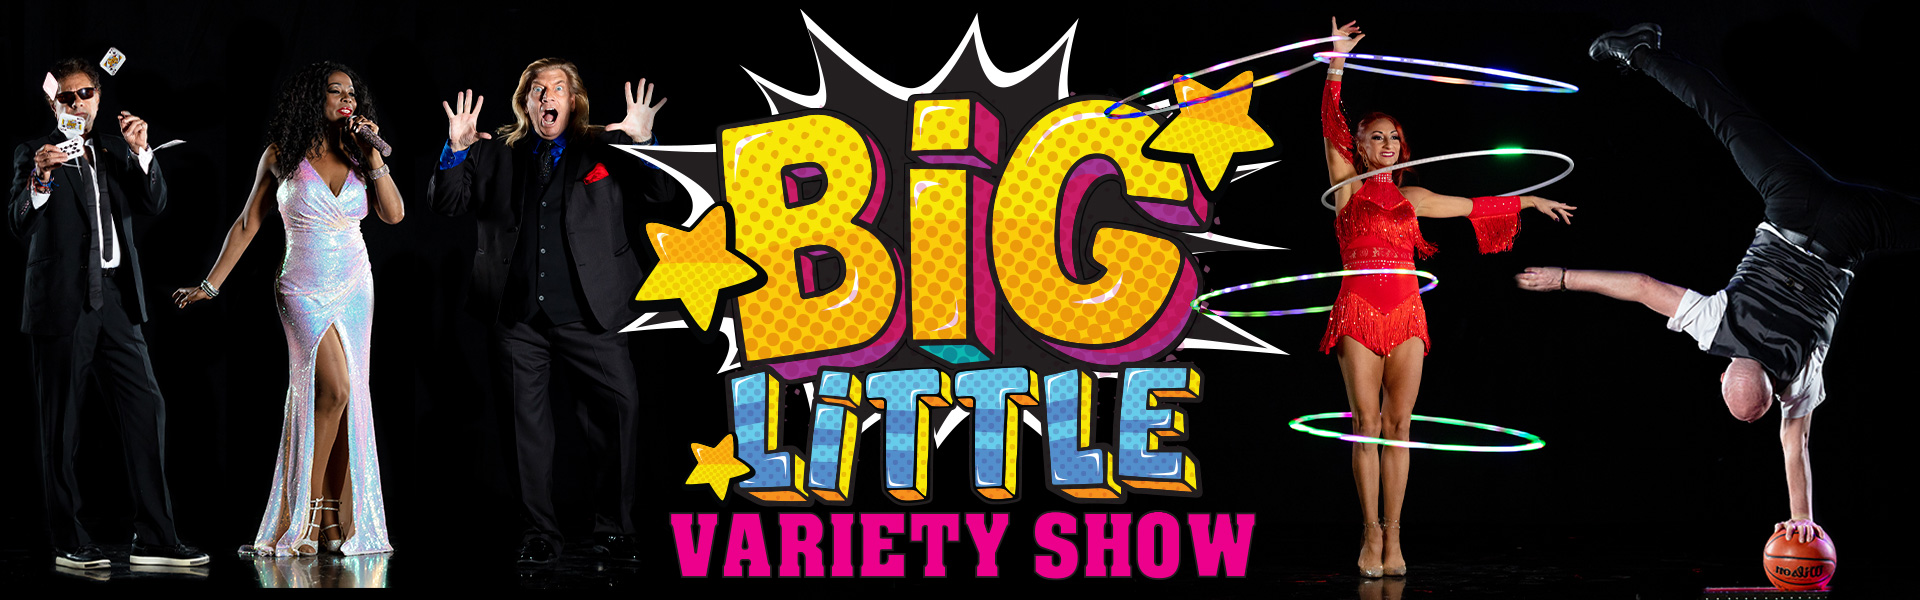 Big Little Variety Show